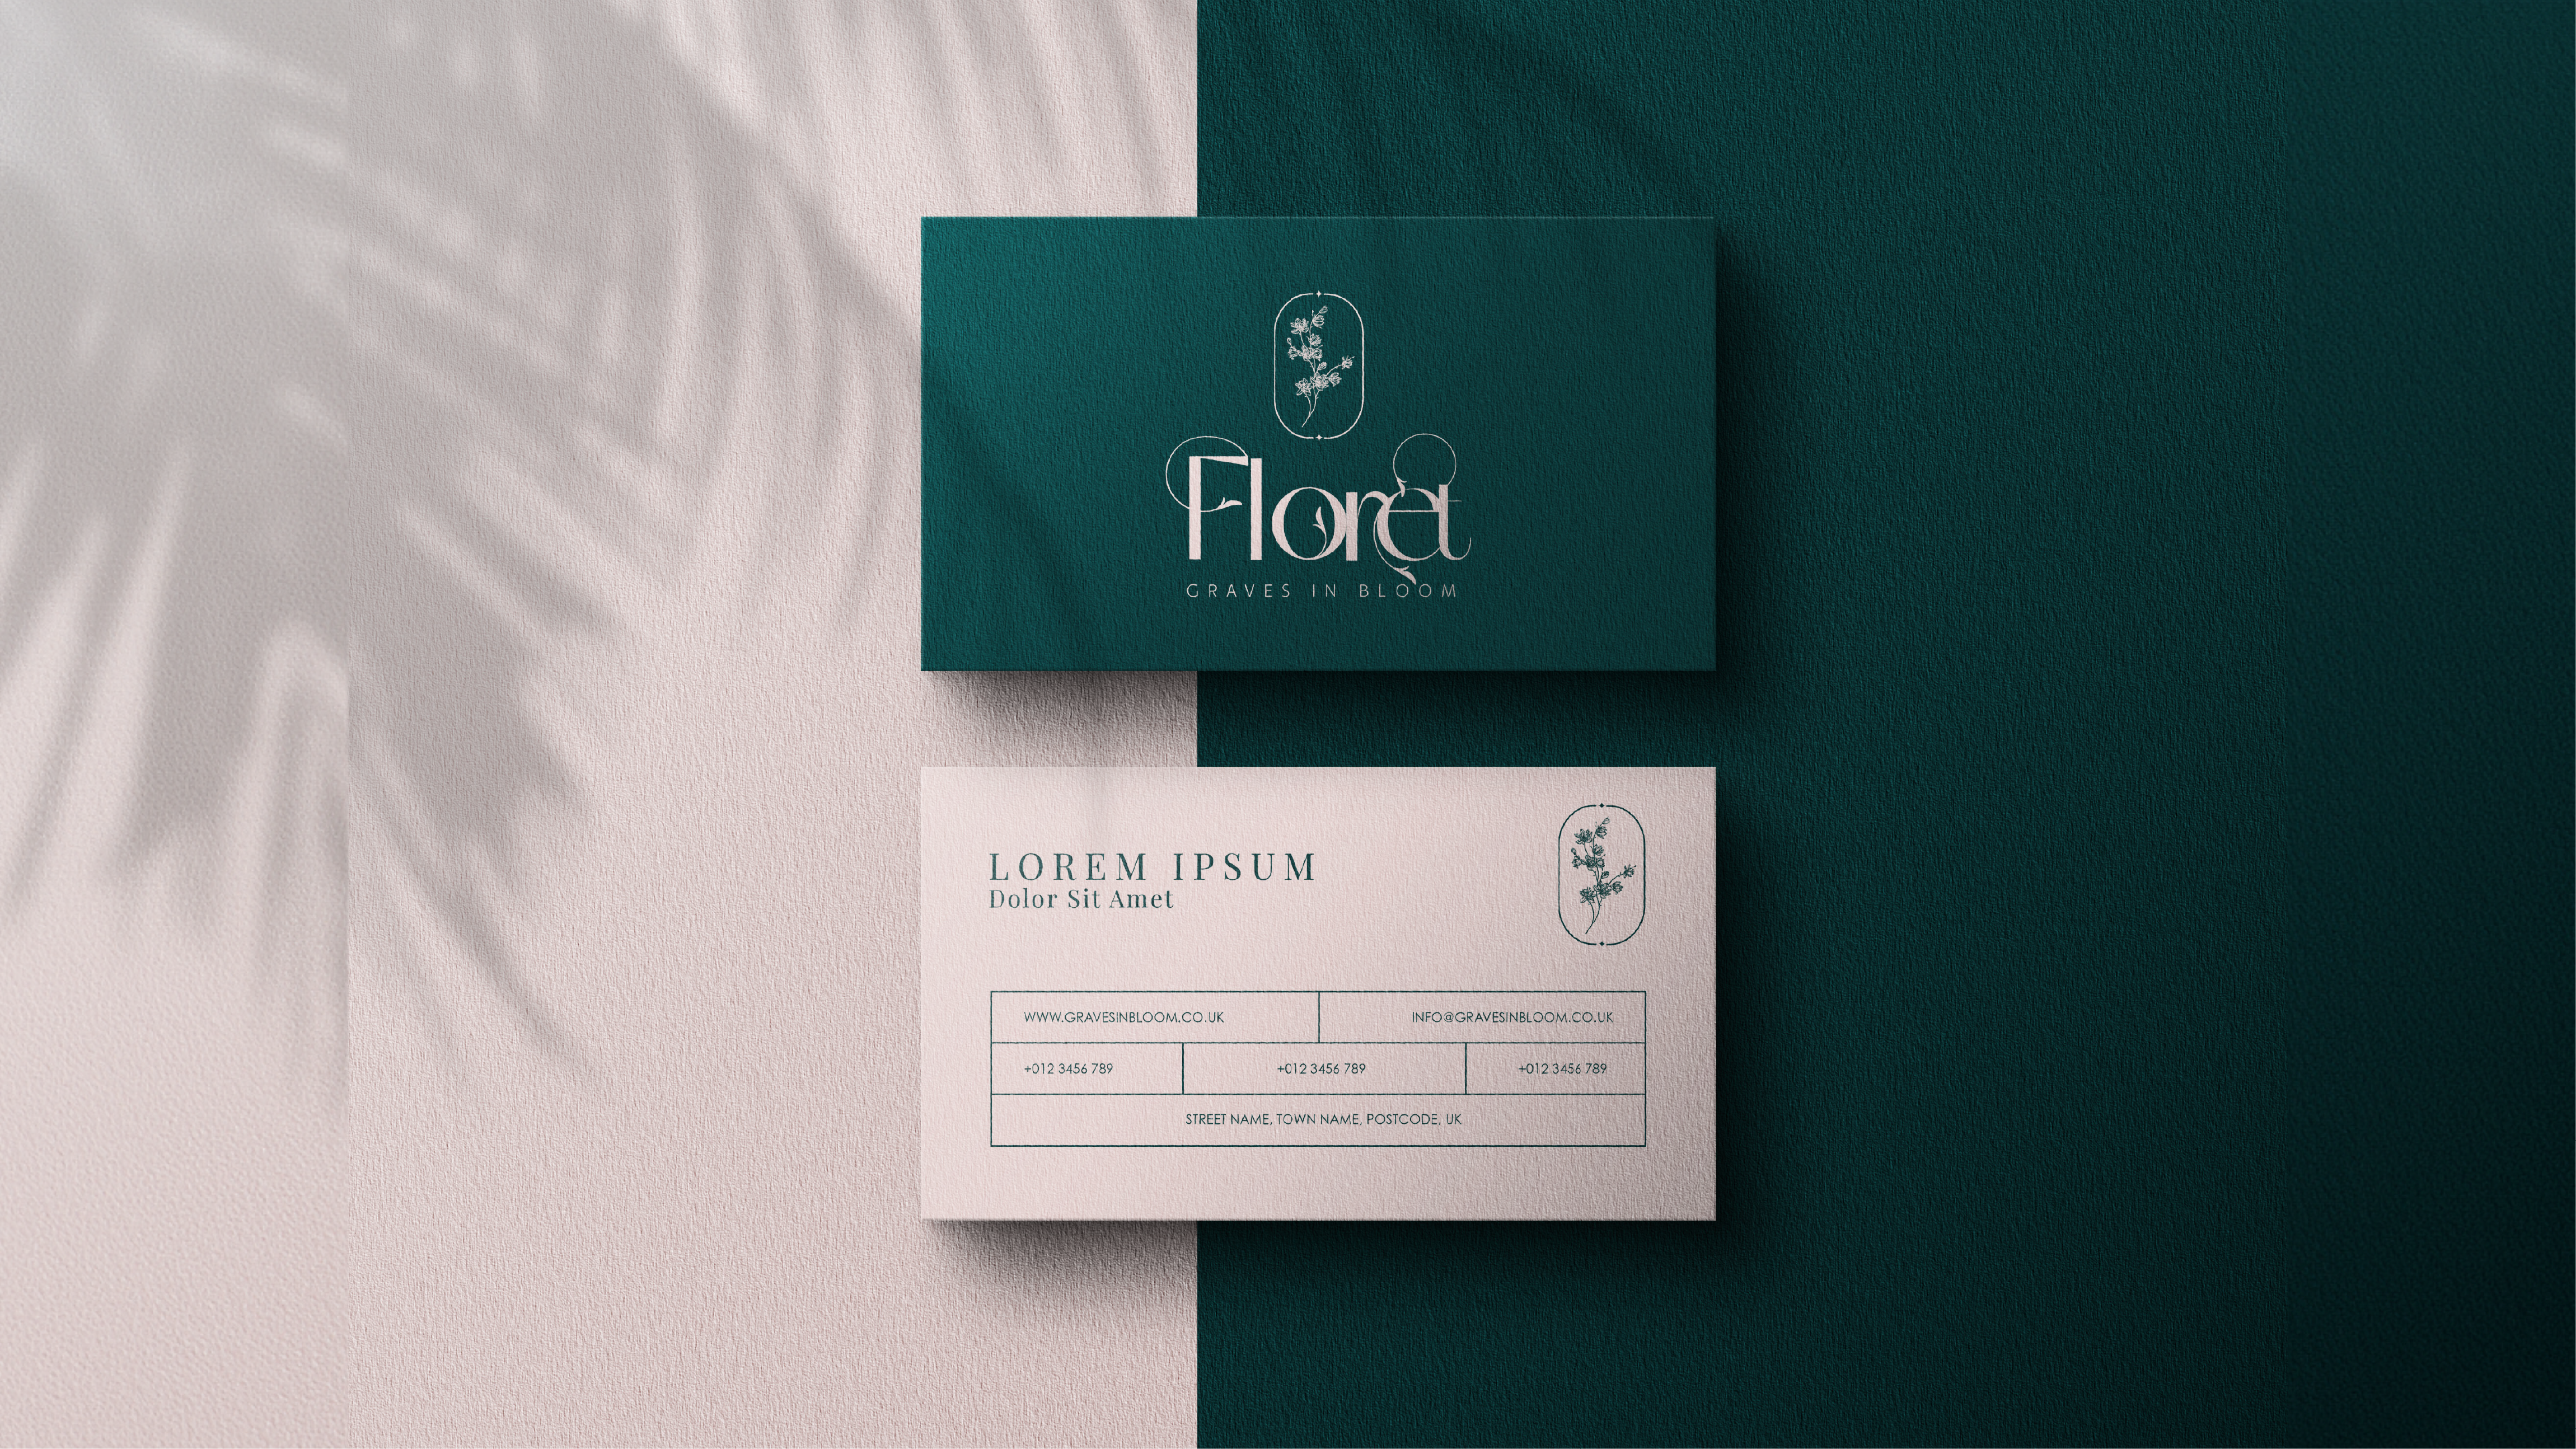 Floret – Graves in Bloom (Brand Creation)